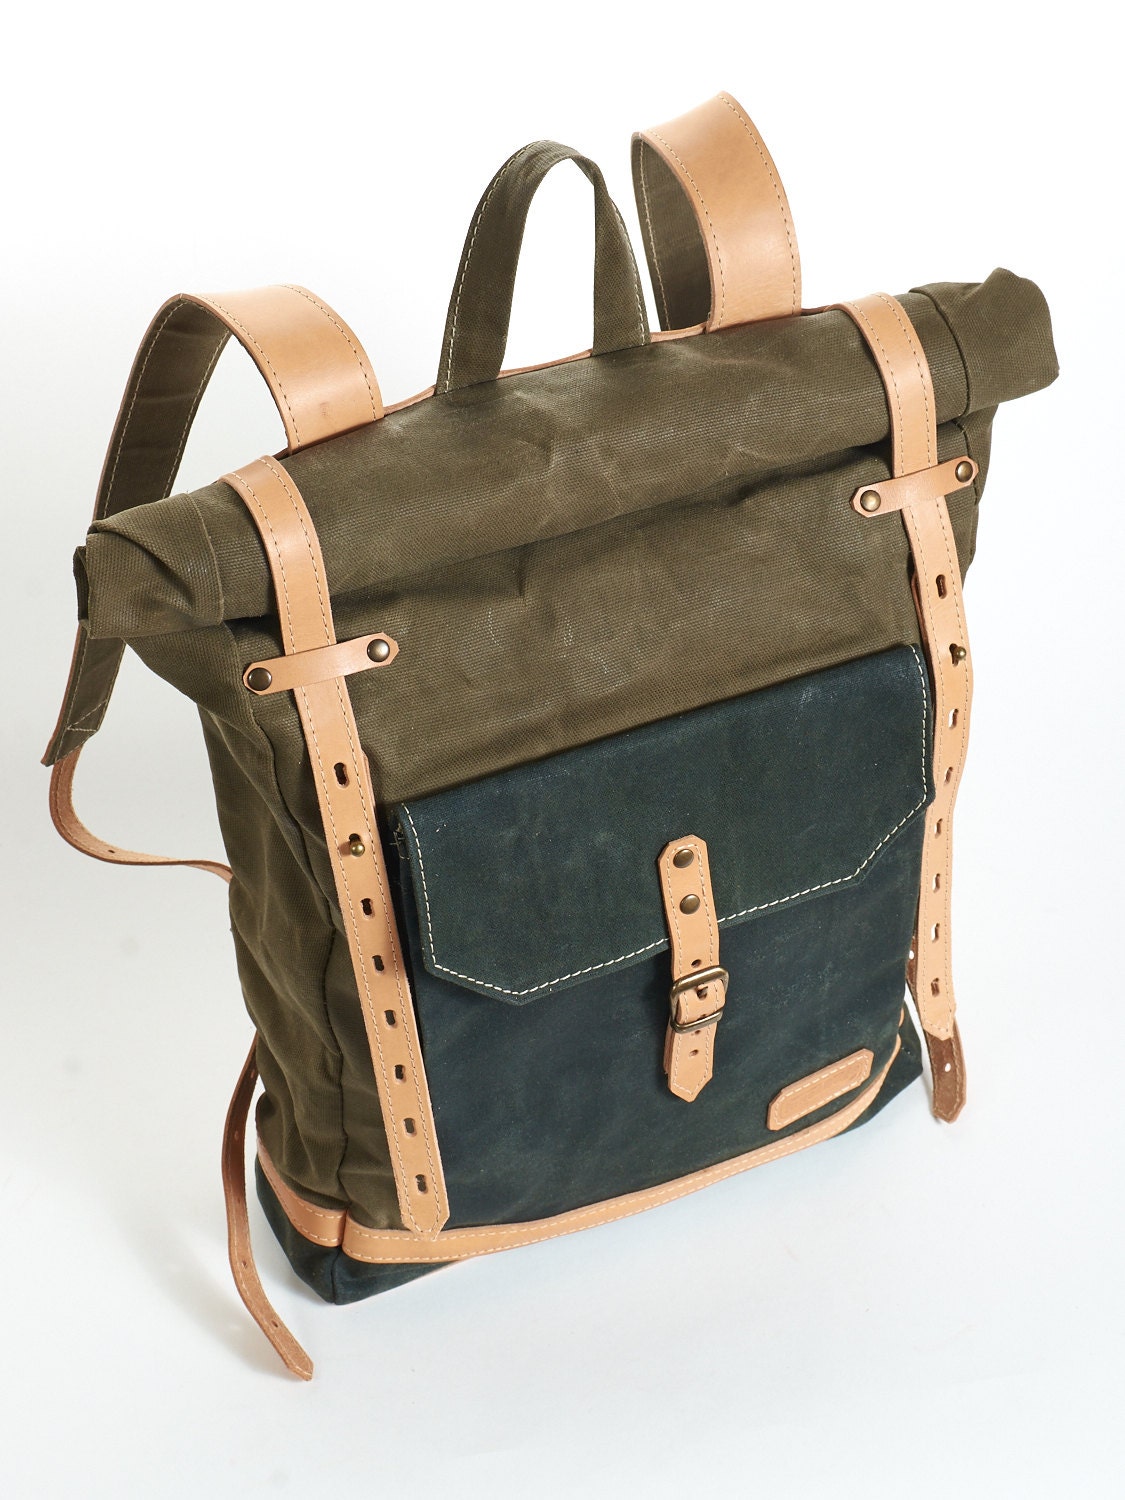 Olive green waxed canvas school backpack. Waxed canvas bag.